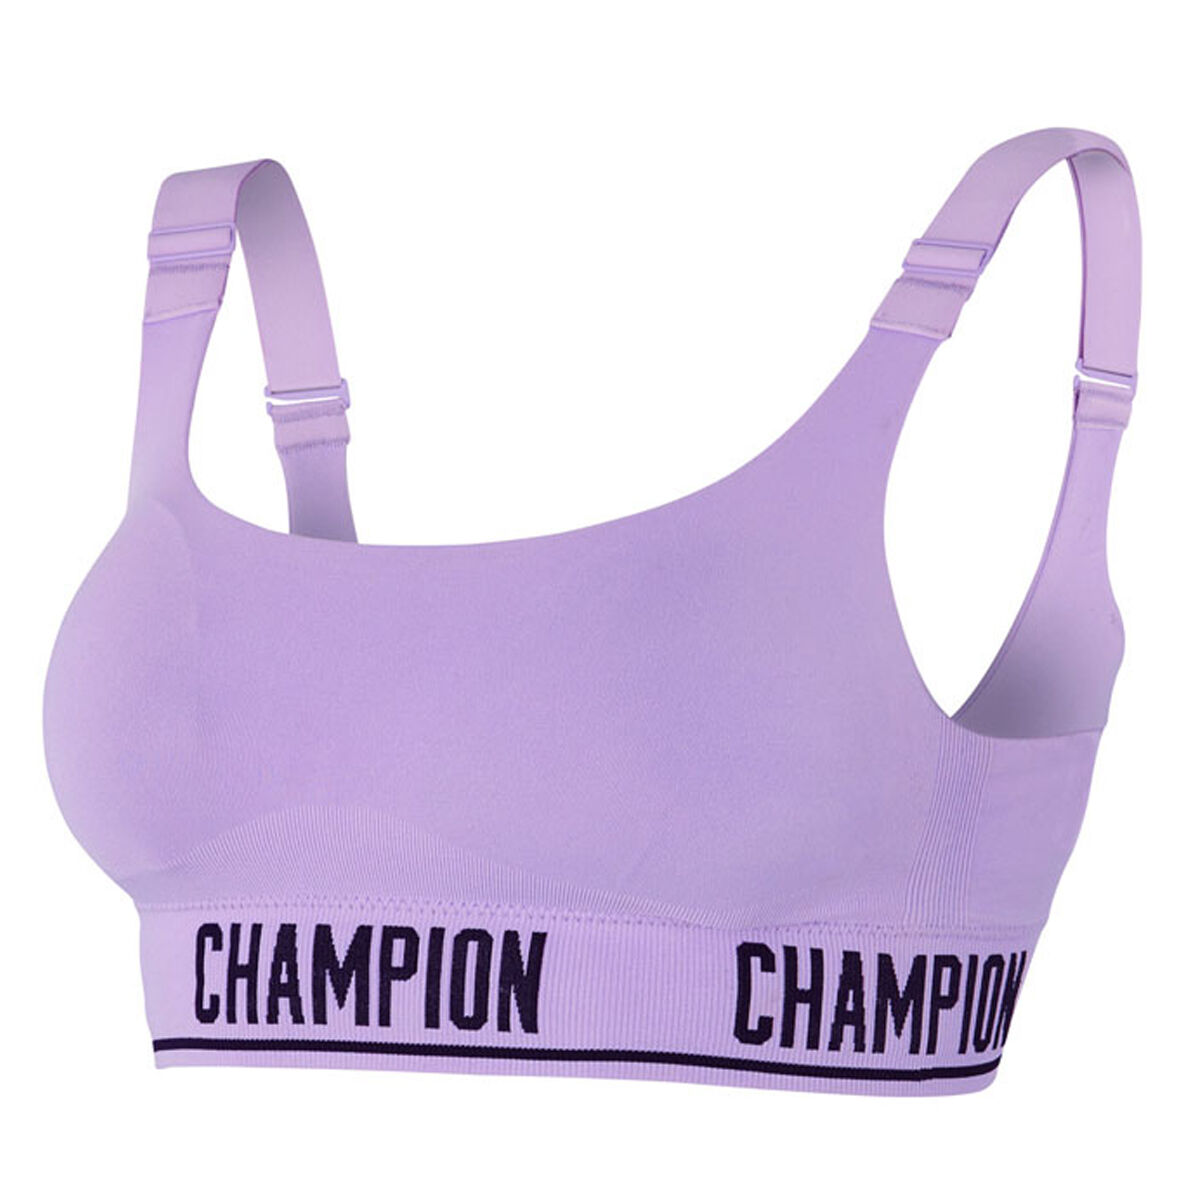 Champion, Intimates & Sleepwear, Nwt Champion Bralette